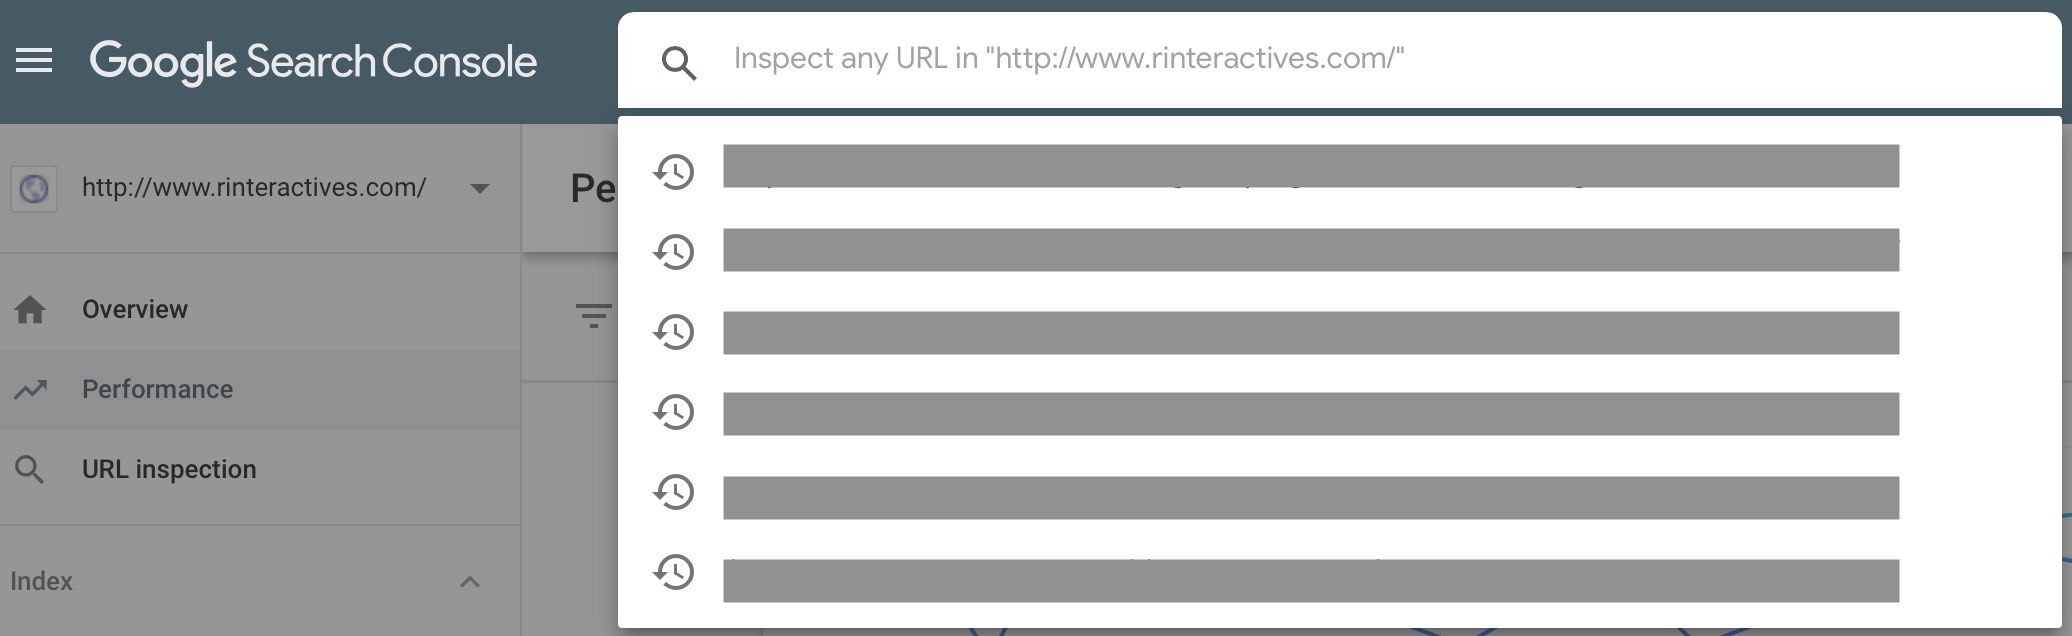 URL Inspection Report 